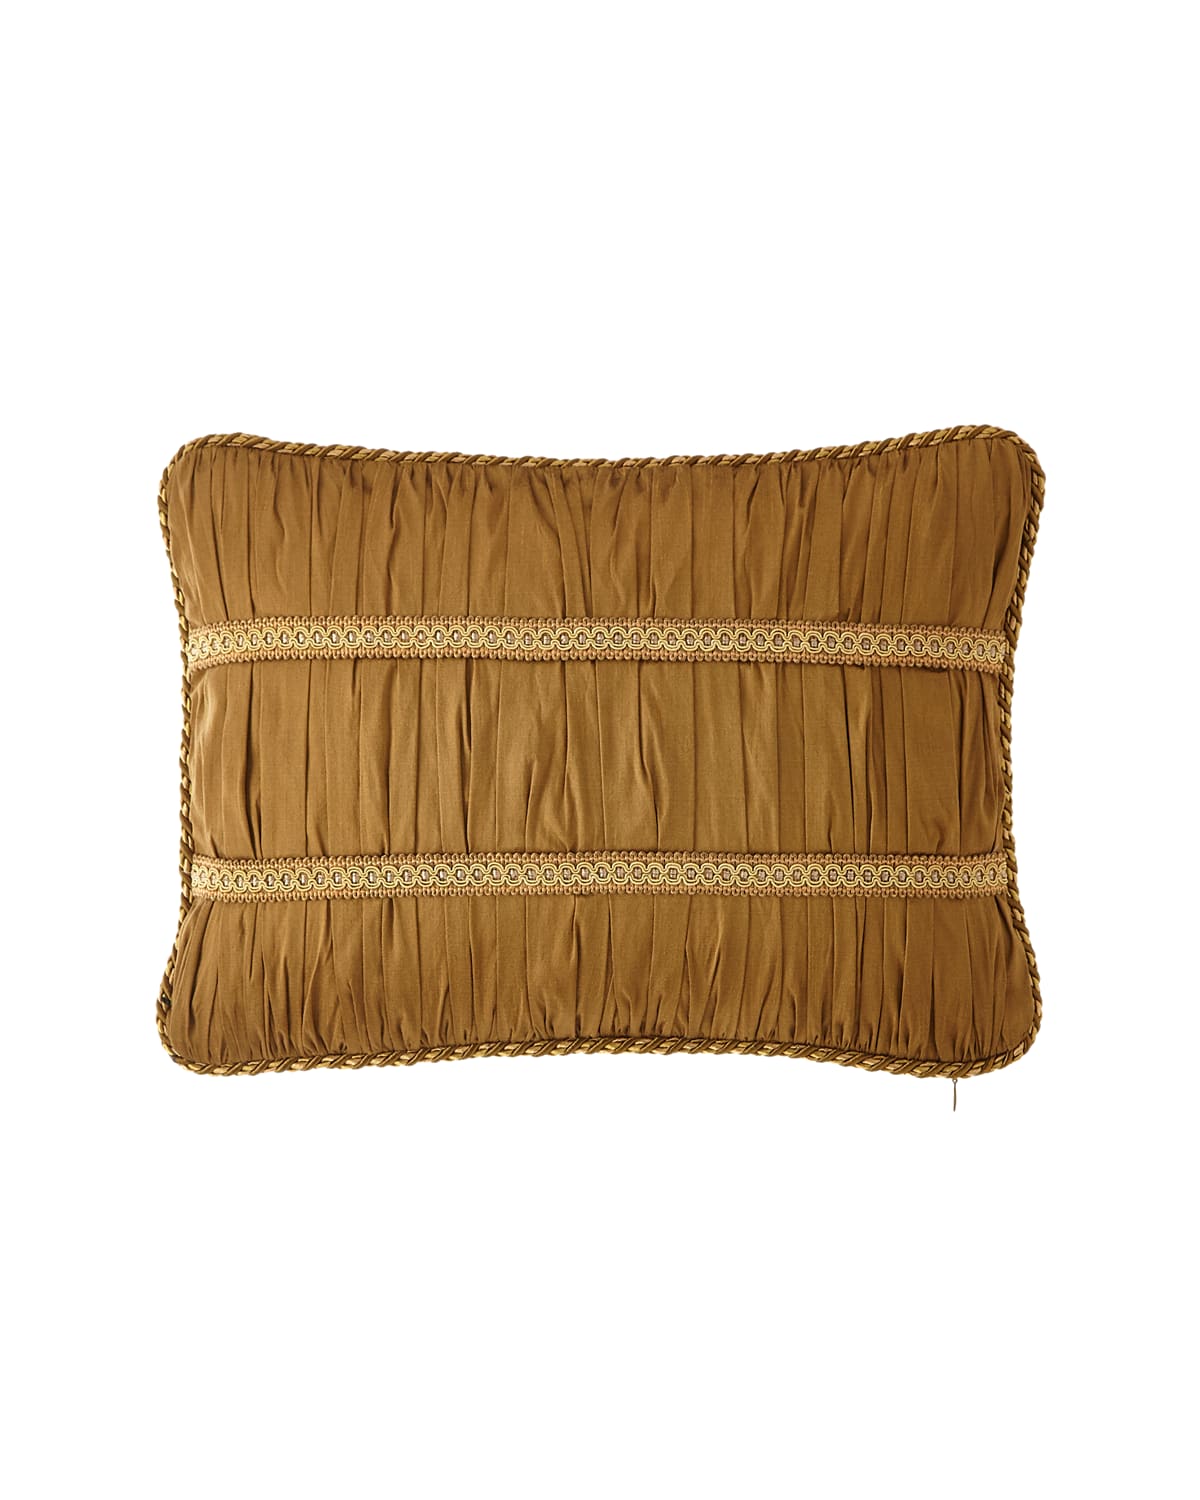 Image Austin Horn Collection Luxe Boudoir Pillow